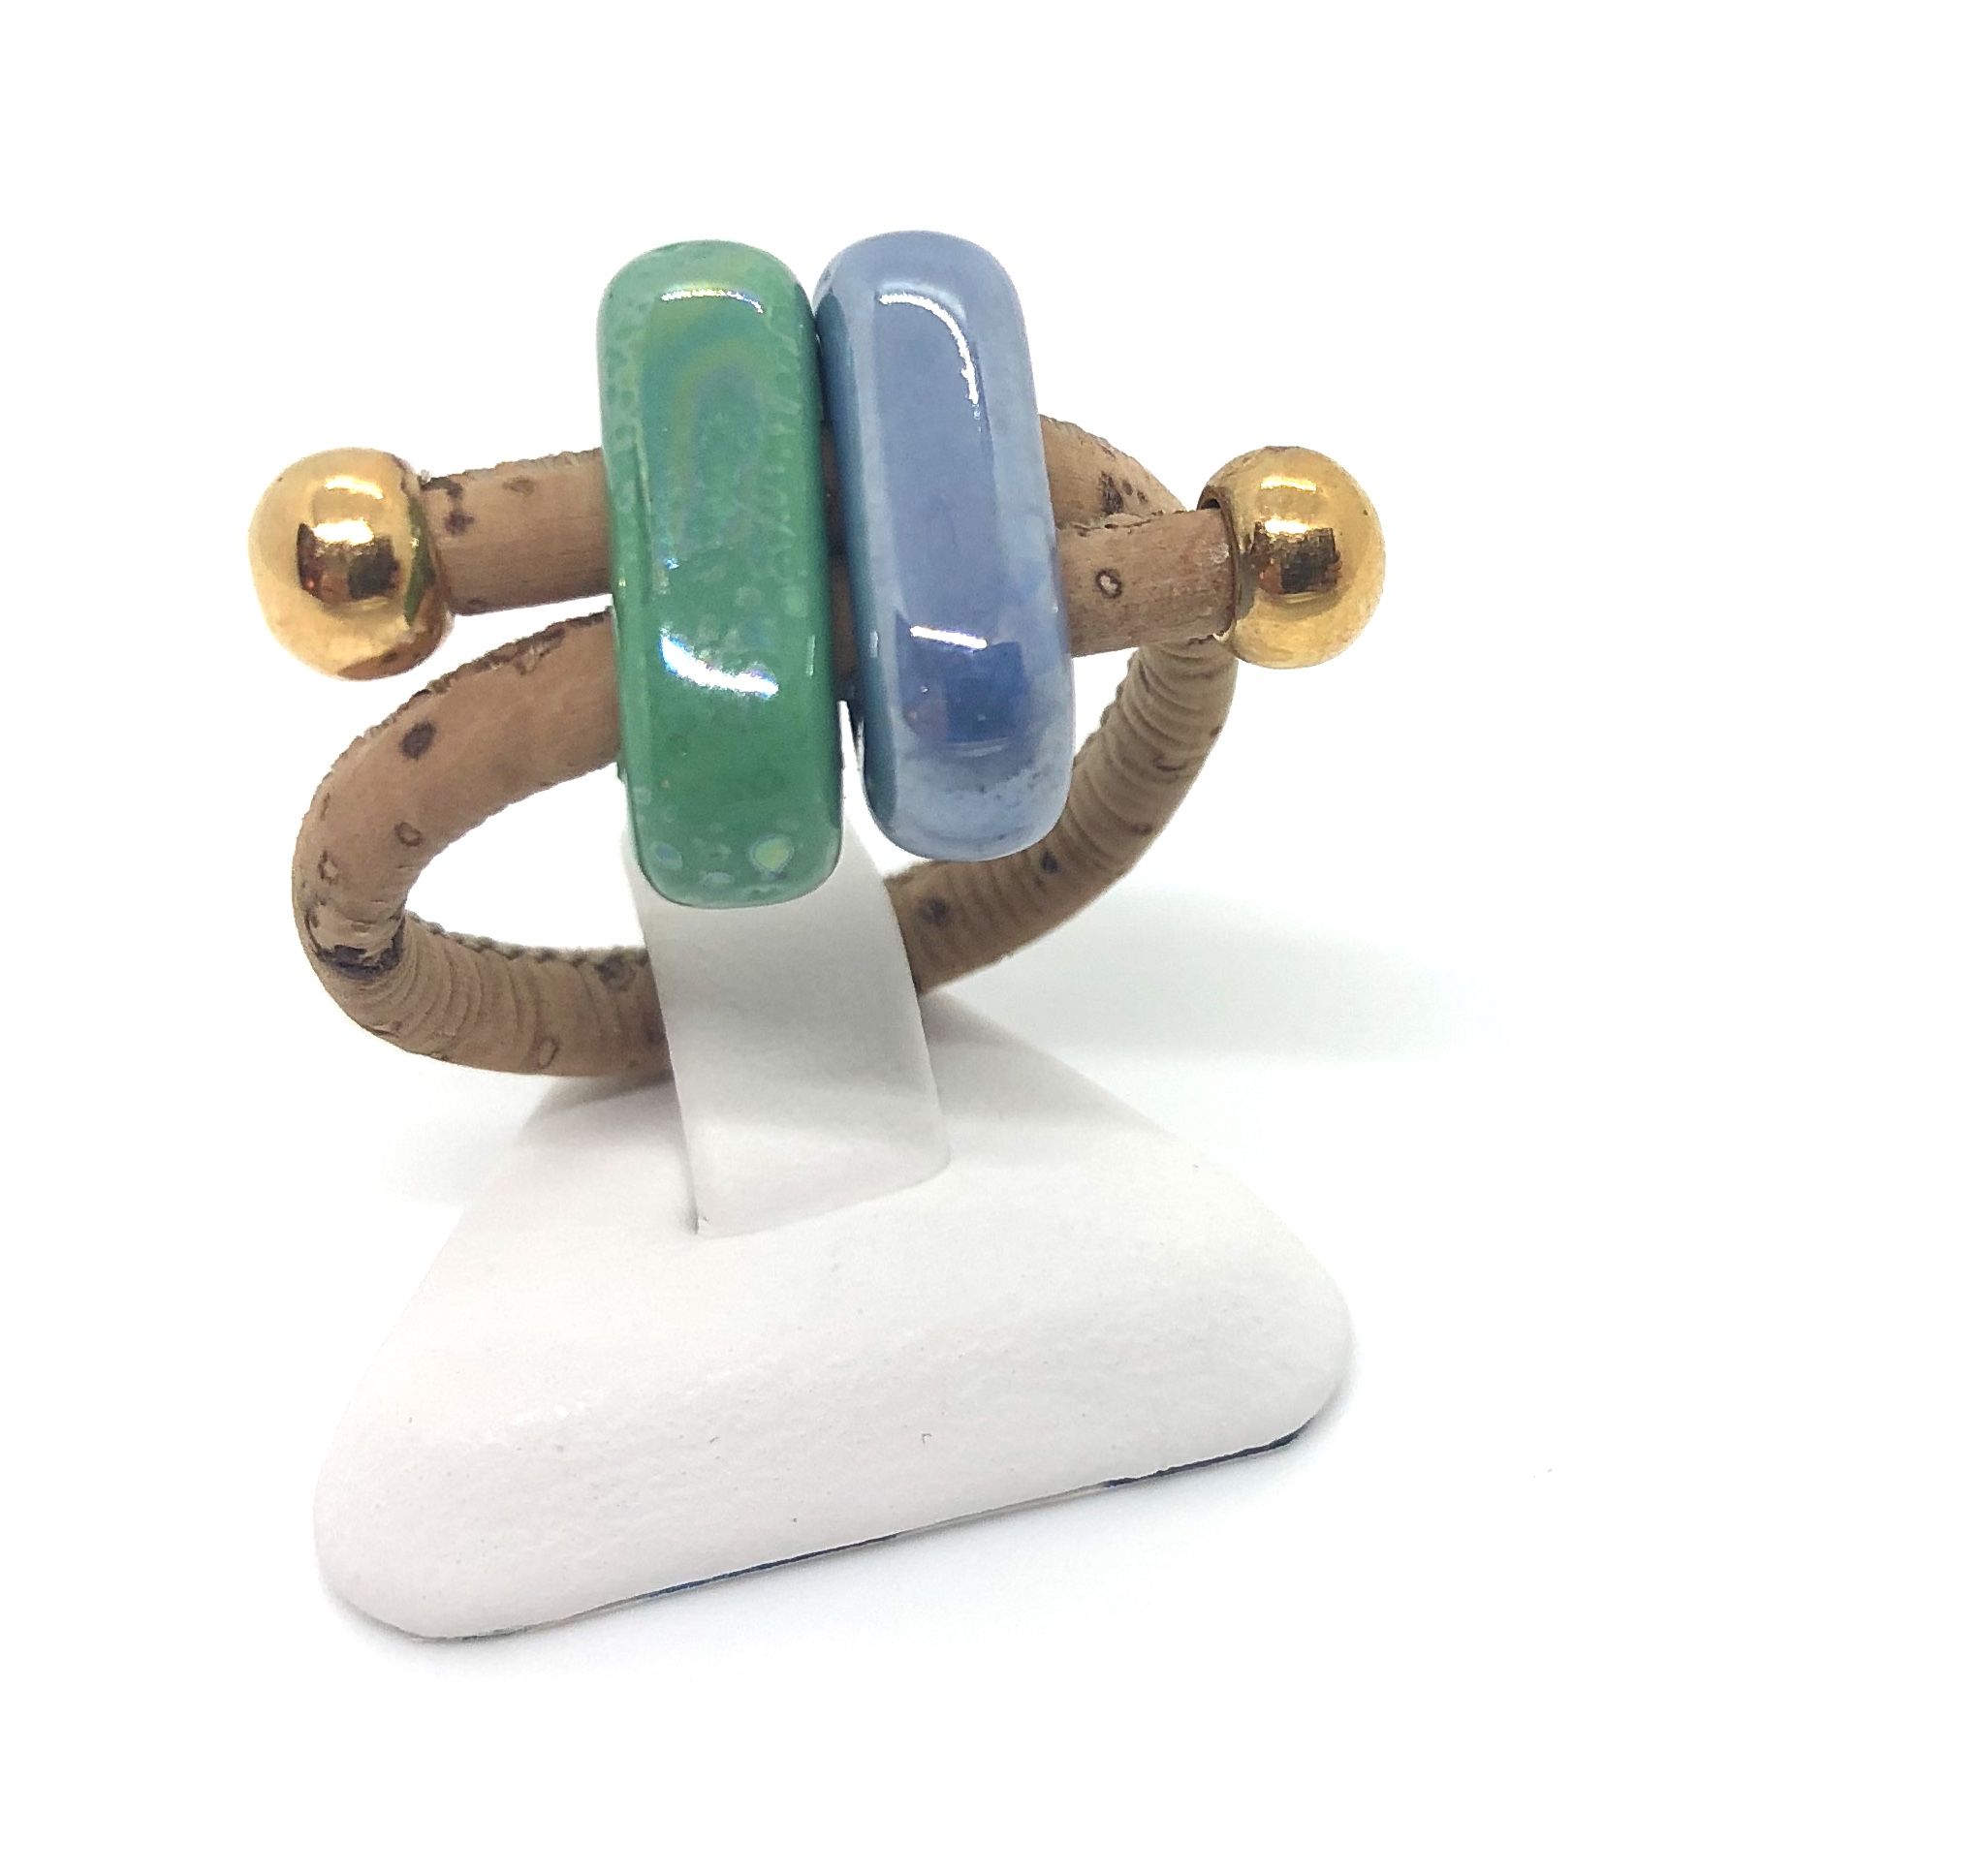 APOXYLO – Γυναικείο δαχτυλίδι APOXYLO 971 DOUBLE GREEN BLUE σμάλτο